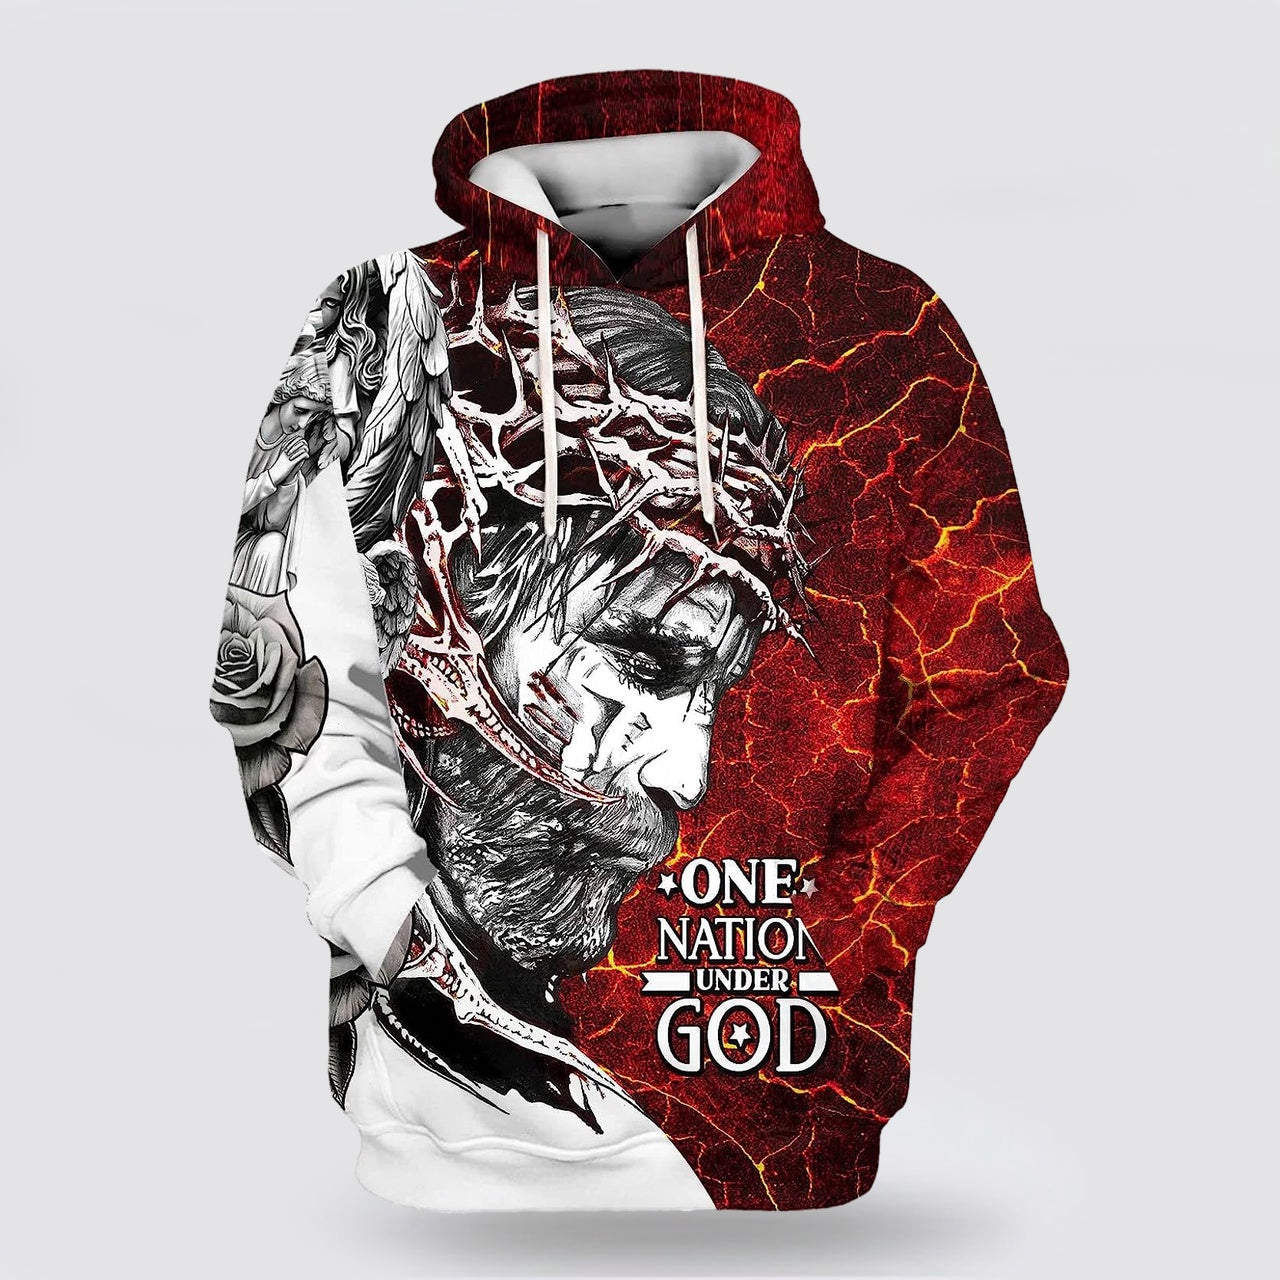 Jesus One Nation Under God 3d Hoodies For Women Men - Christian Apparel Hoodies